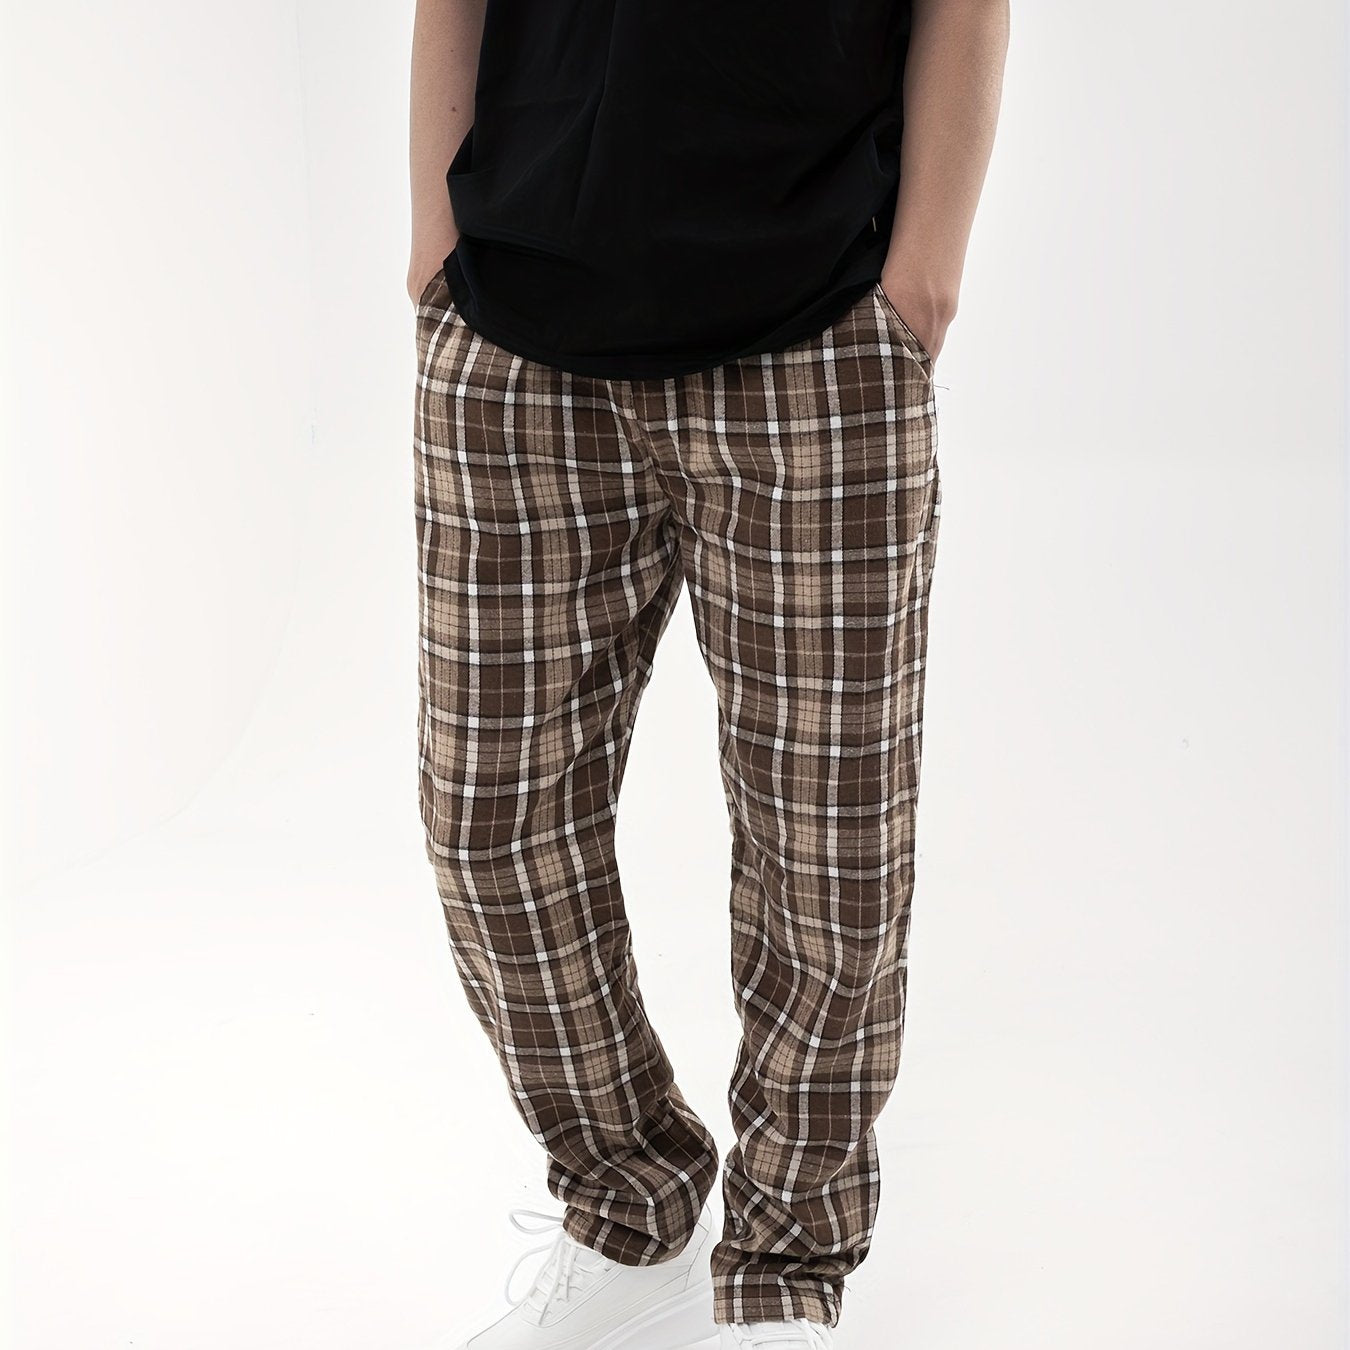 Men's Drawstring Wide Leg Pants   Trendy Checkered Pattern Casual Baggy Pants Streetwear Hiphop Rapper Style